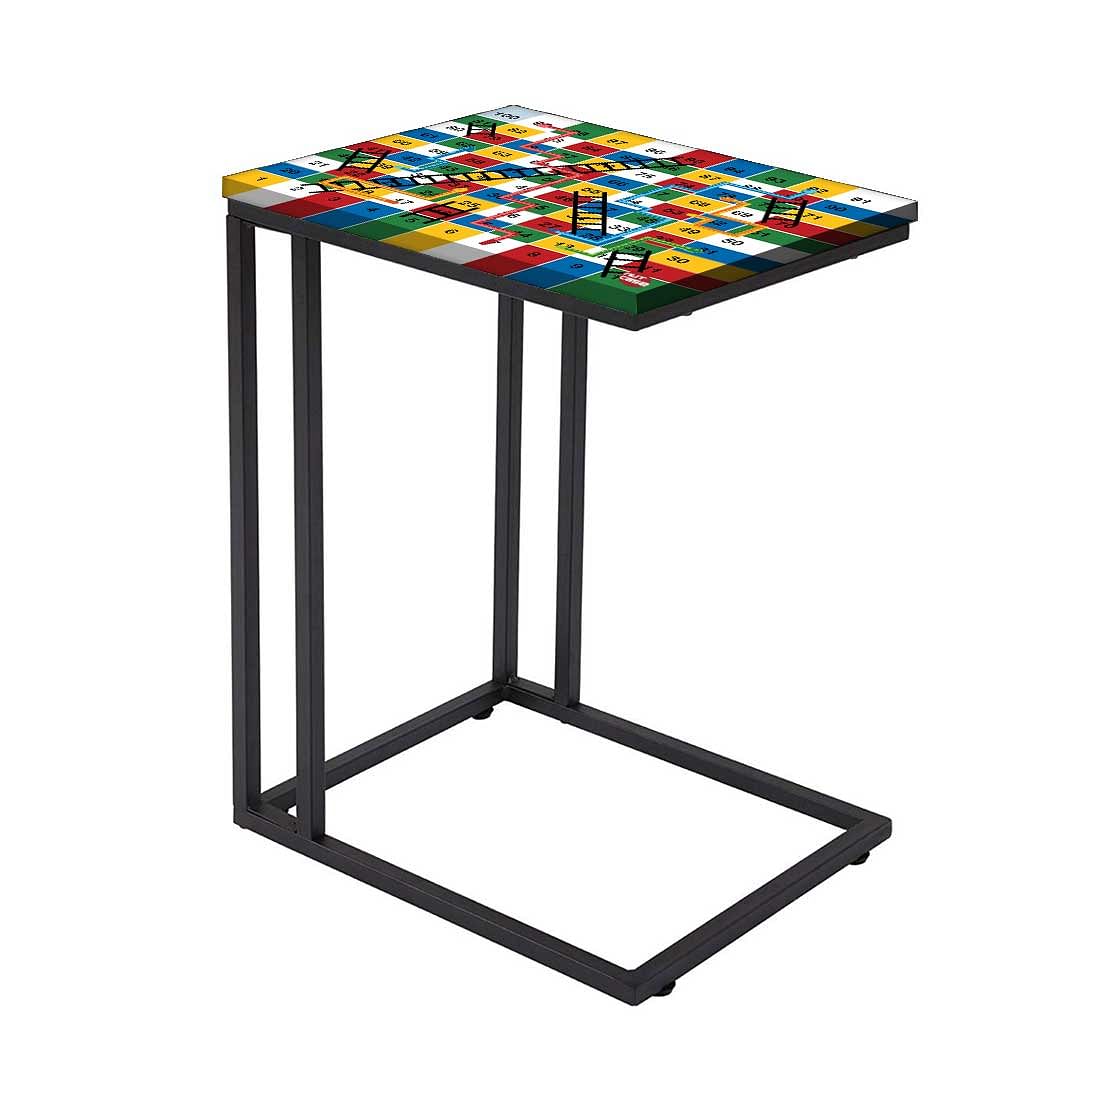 C Shaped Laptop Table for Kids -Snake & Ladder Multicolored Nutcase